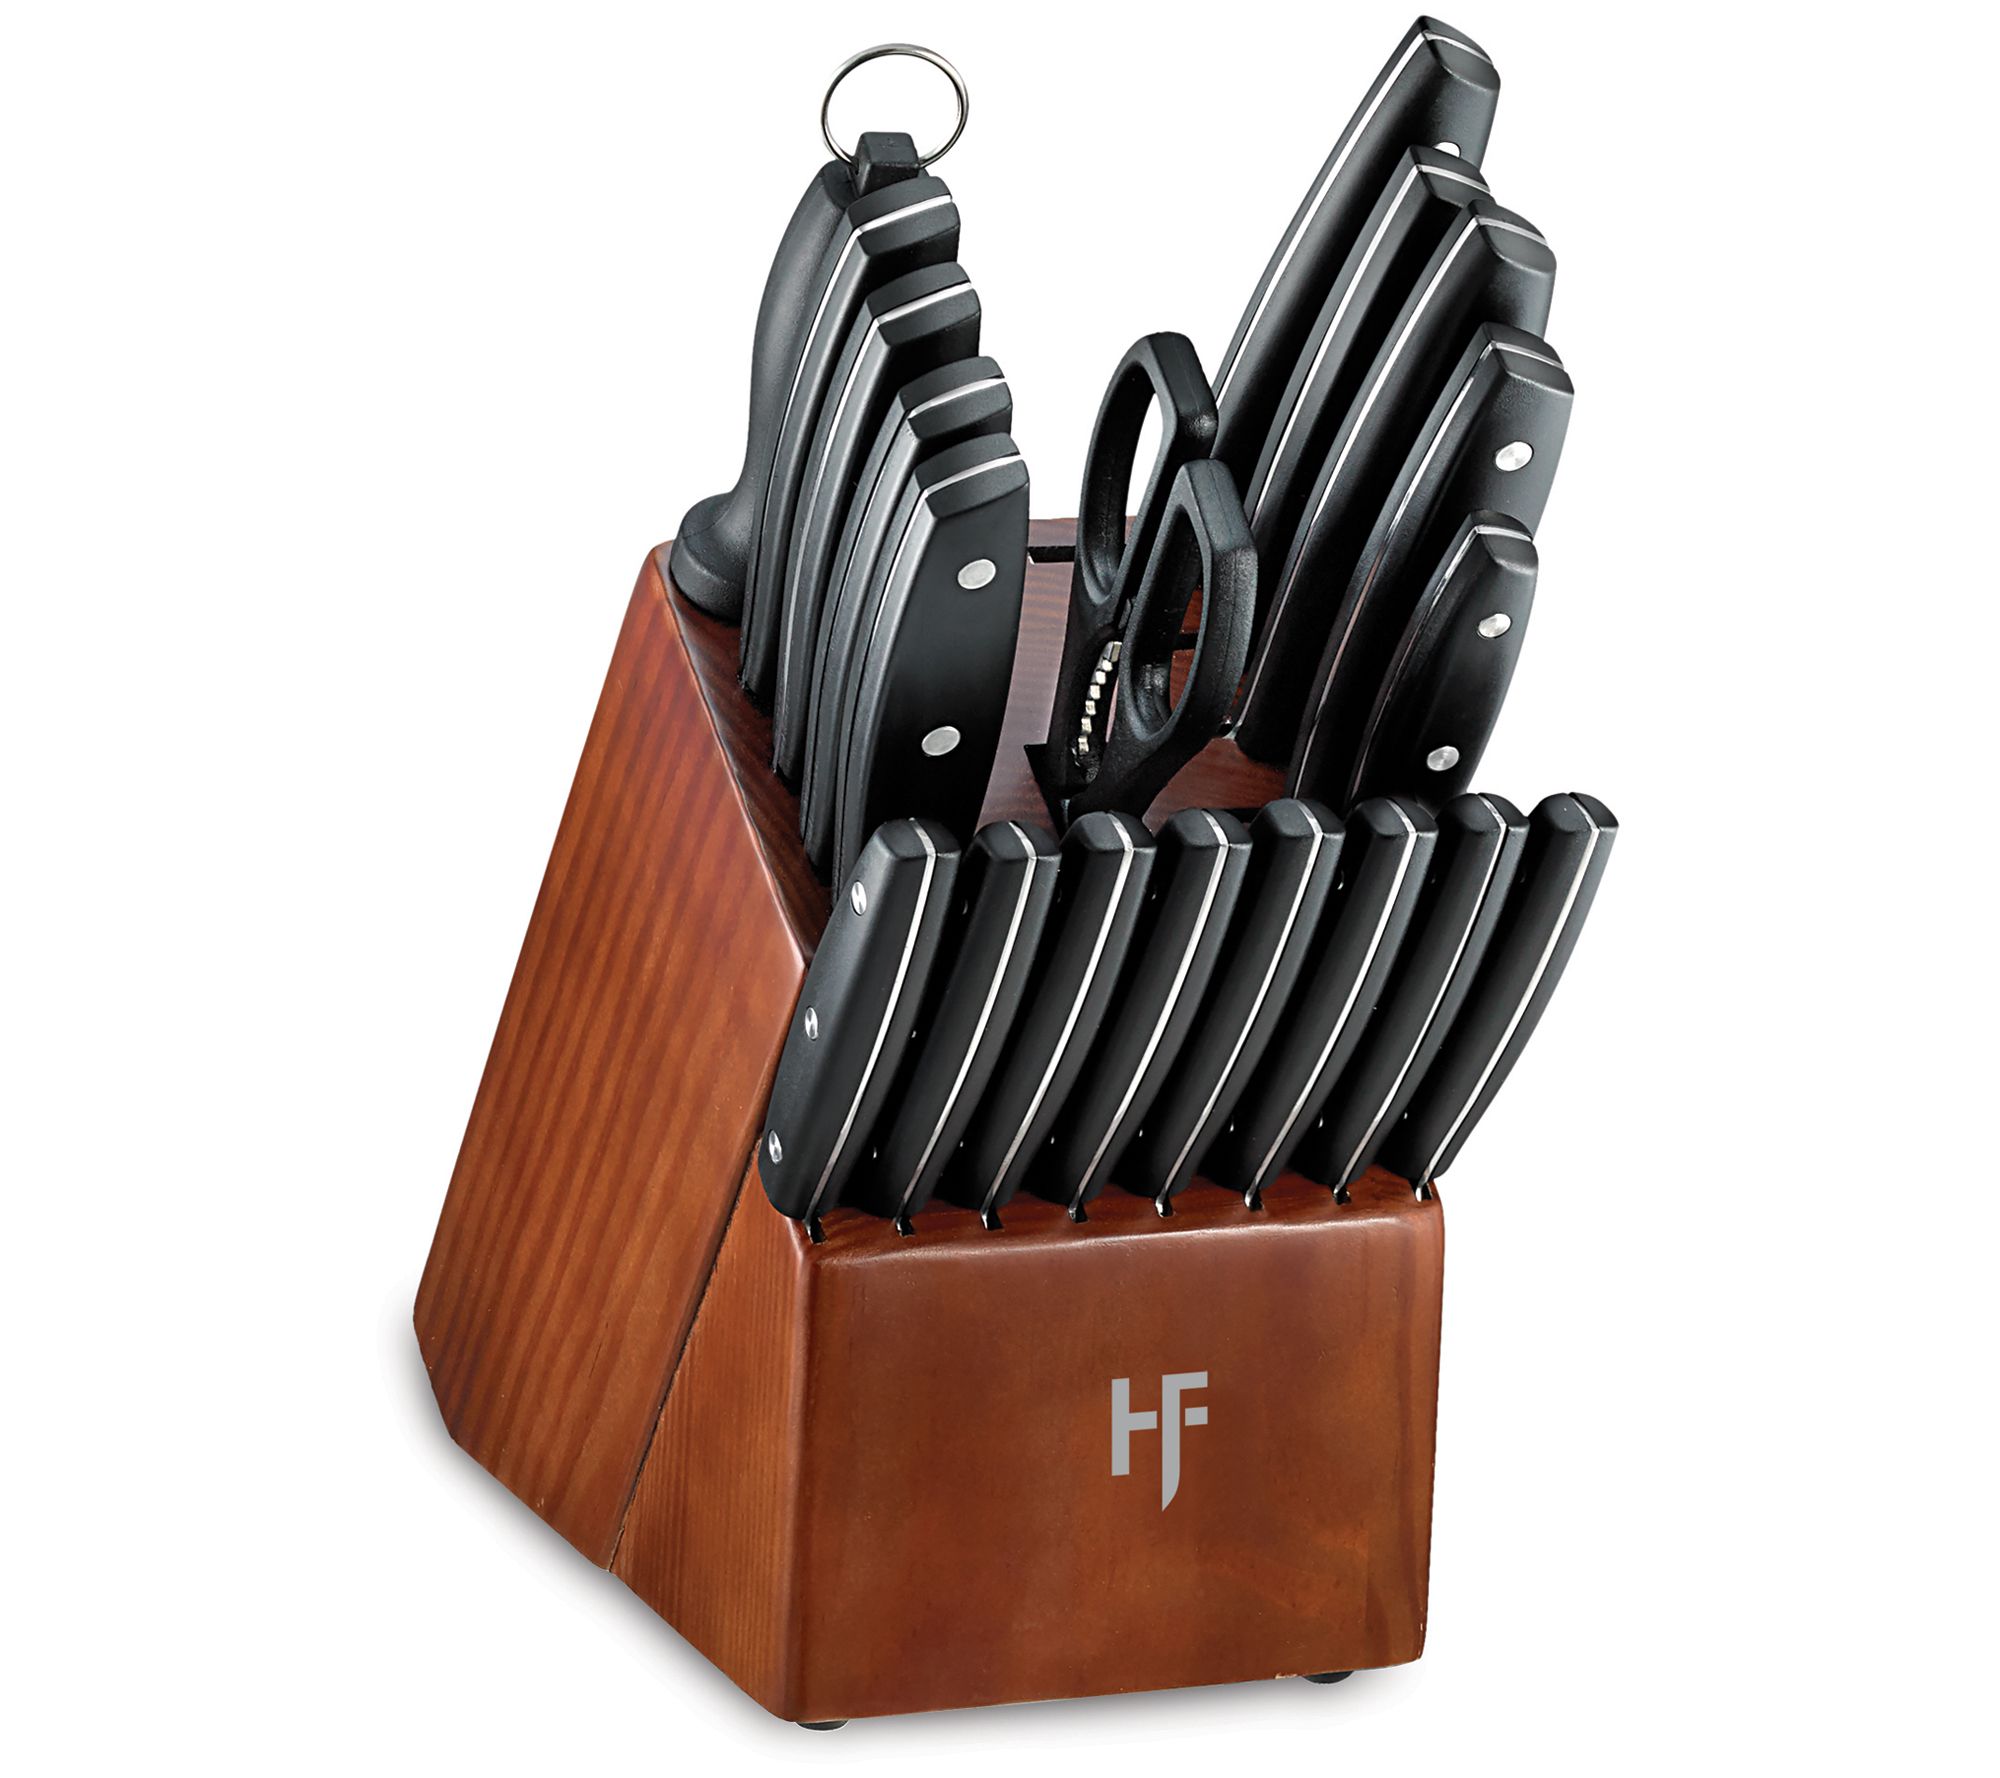 Tomodachi Titanium 10 Piece Cutlery Set - Hampton Forge